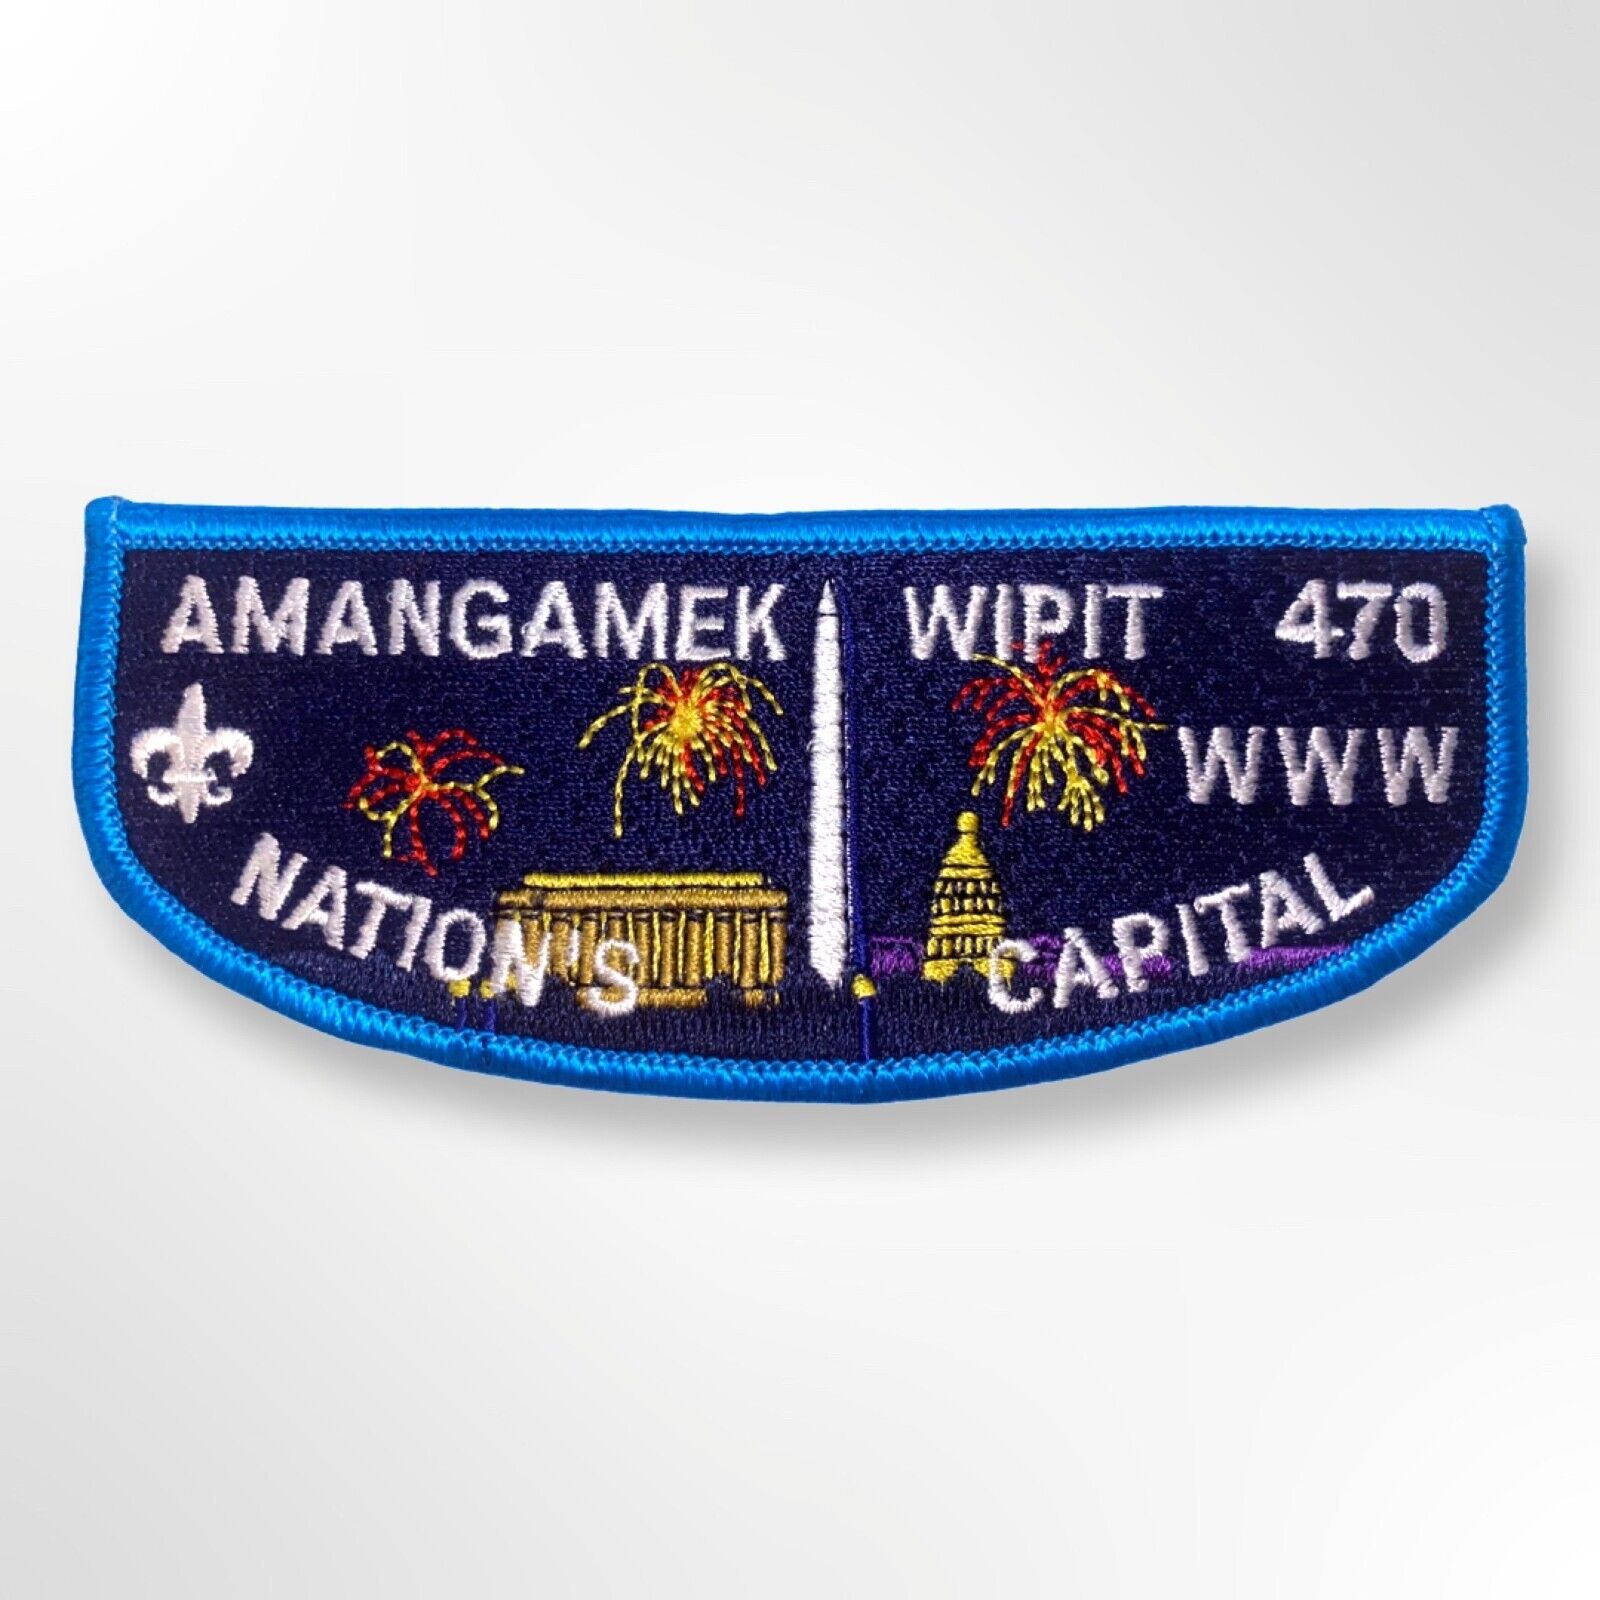 U.S. Capitol Skyline during Fourth of July- Amangamek Wipit, Lodge 470, OA Flap